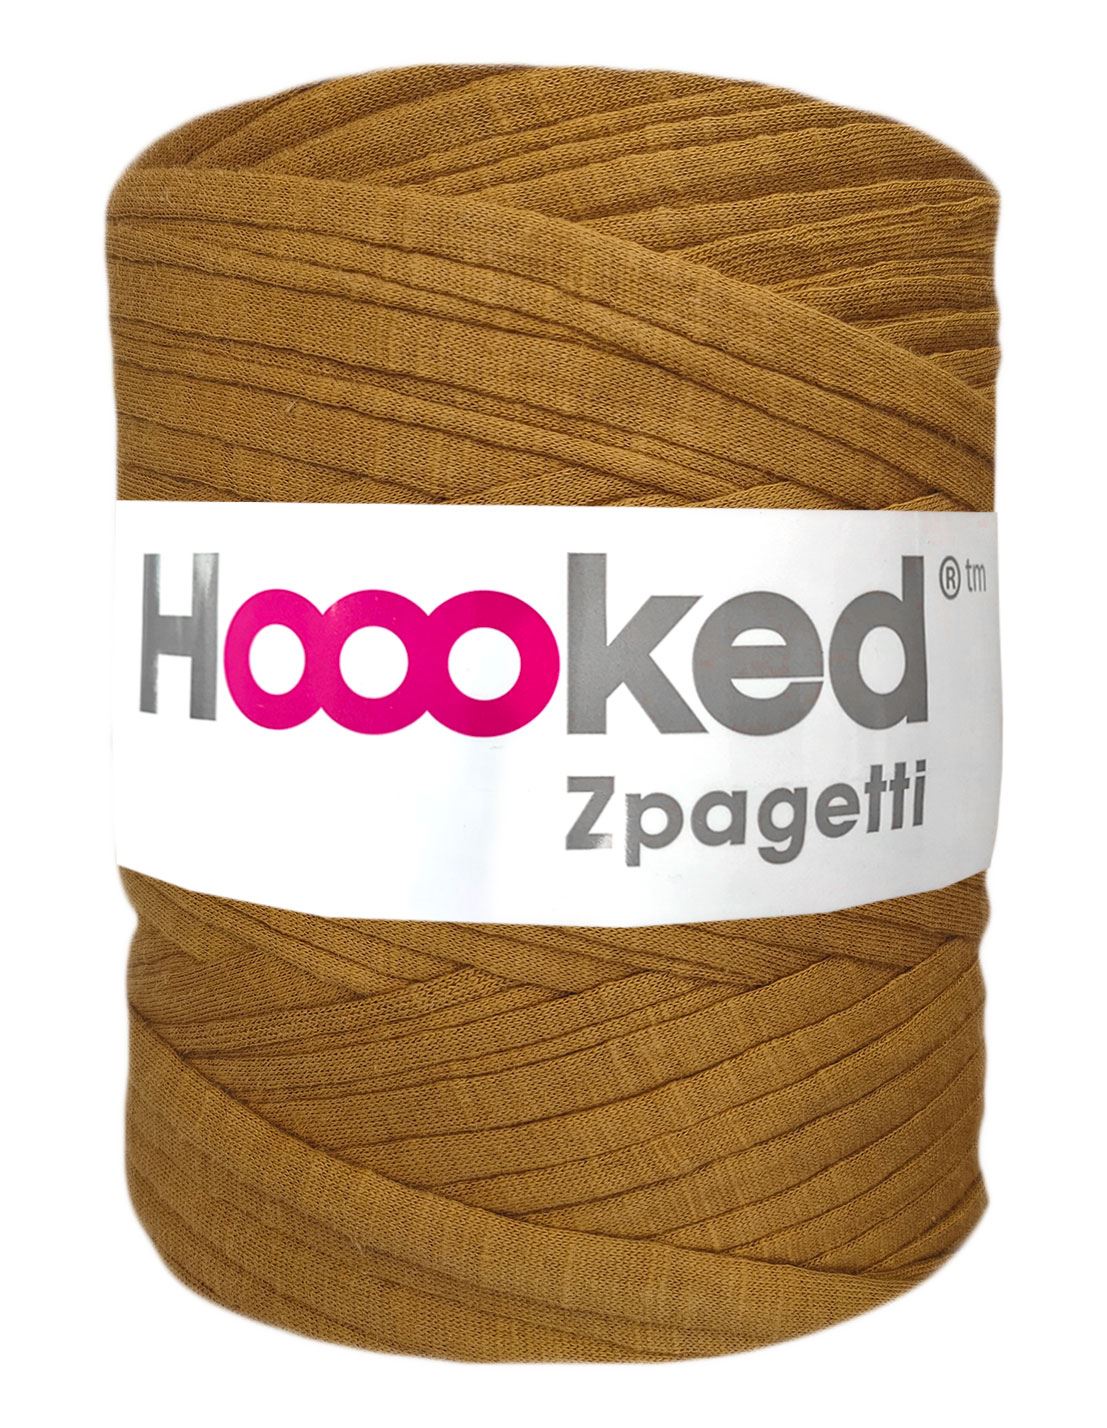 Deep golden yellow t-shirt yarn by Hoooked Zpagetti (100-120m)